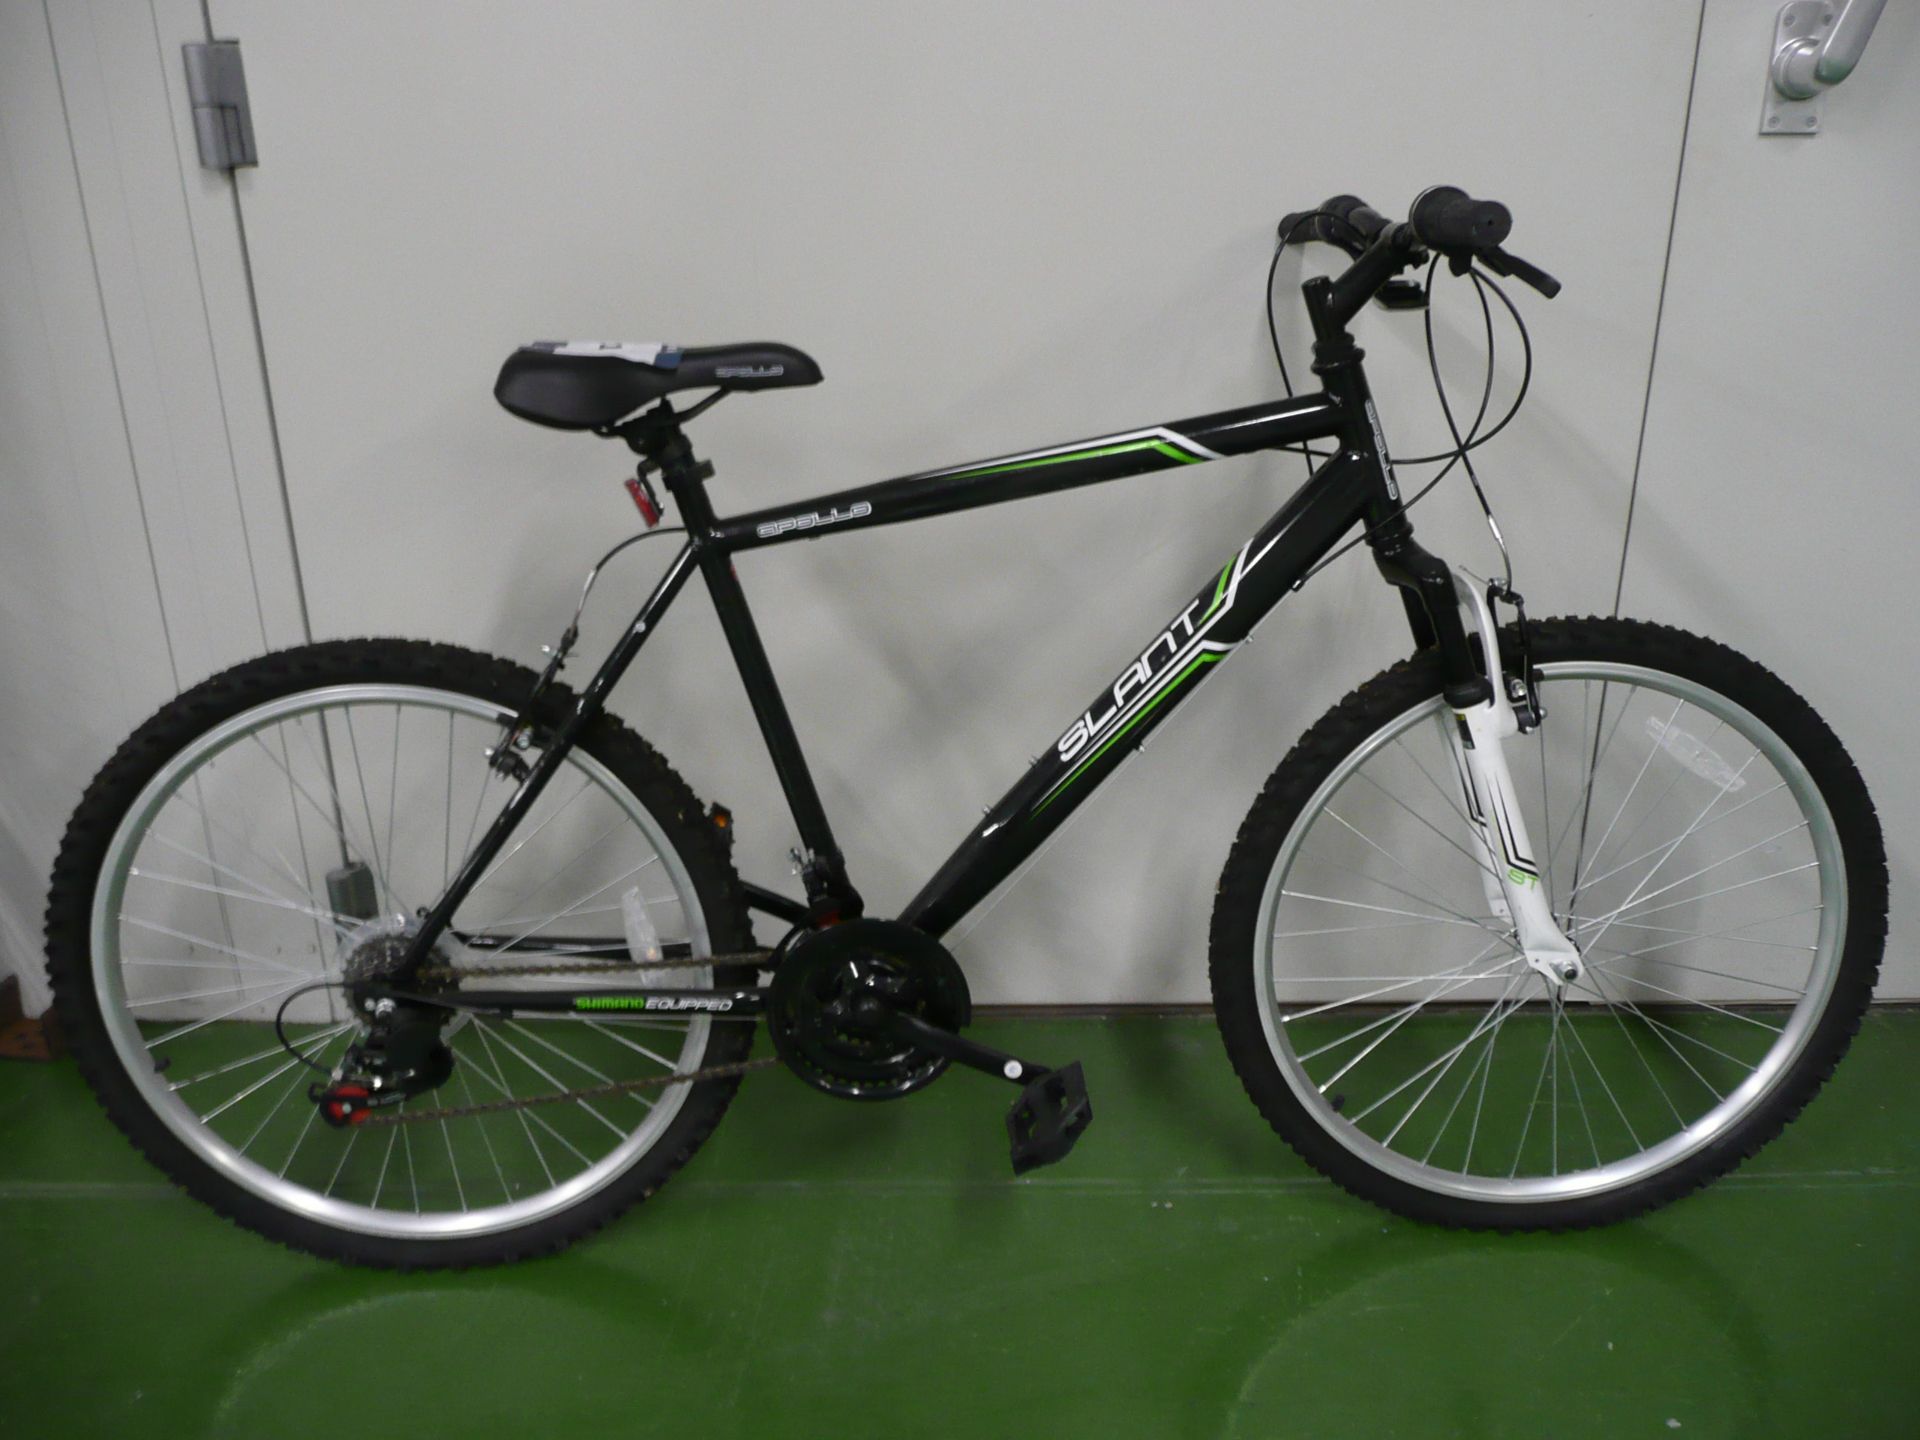 Apollo, Slant, mountain bike, 20" frame size, 200m ST hydraulic front forks, Shimano gears (